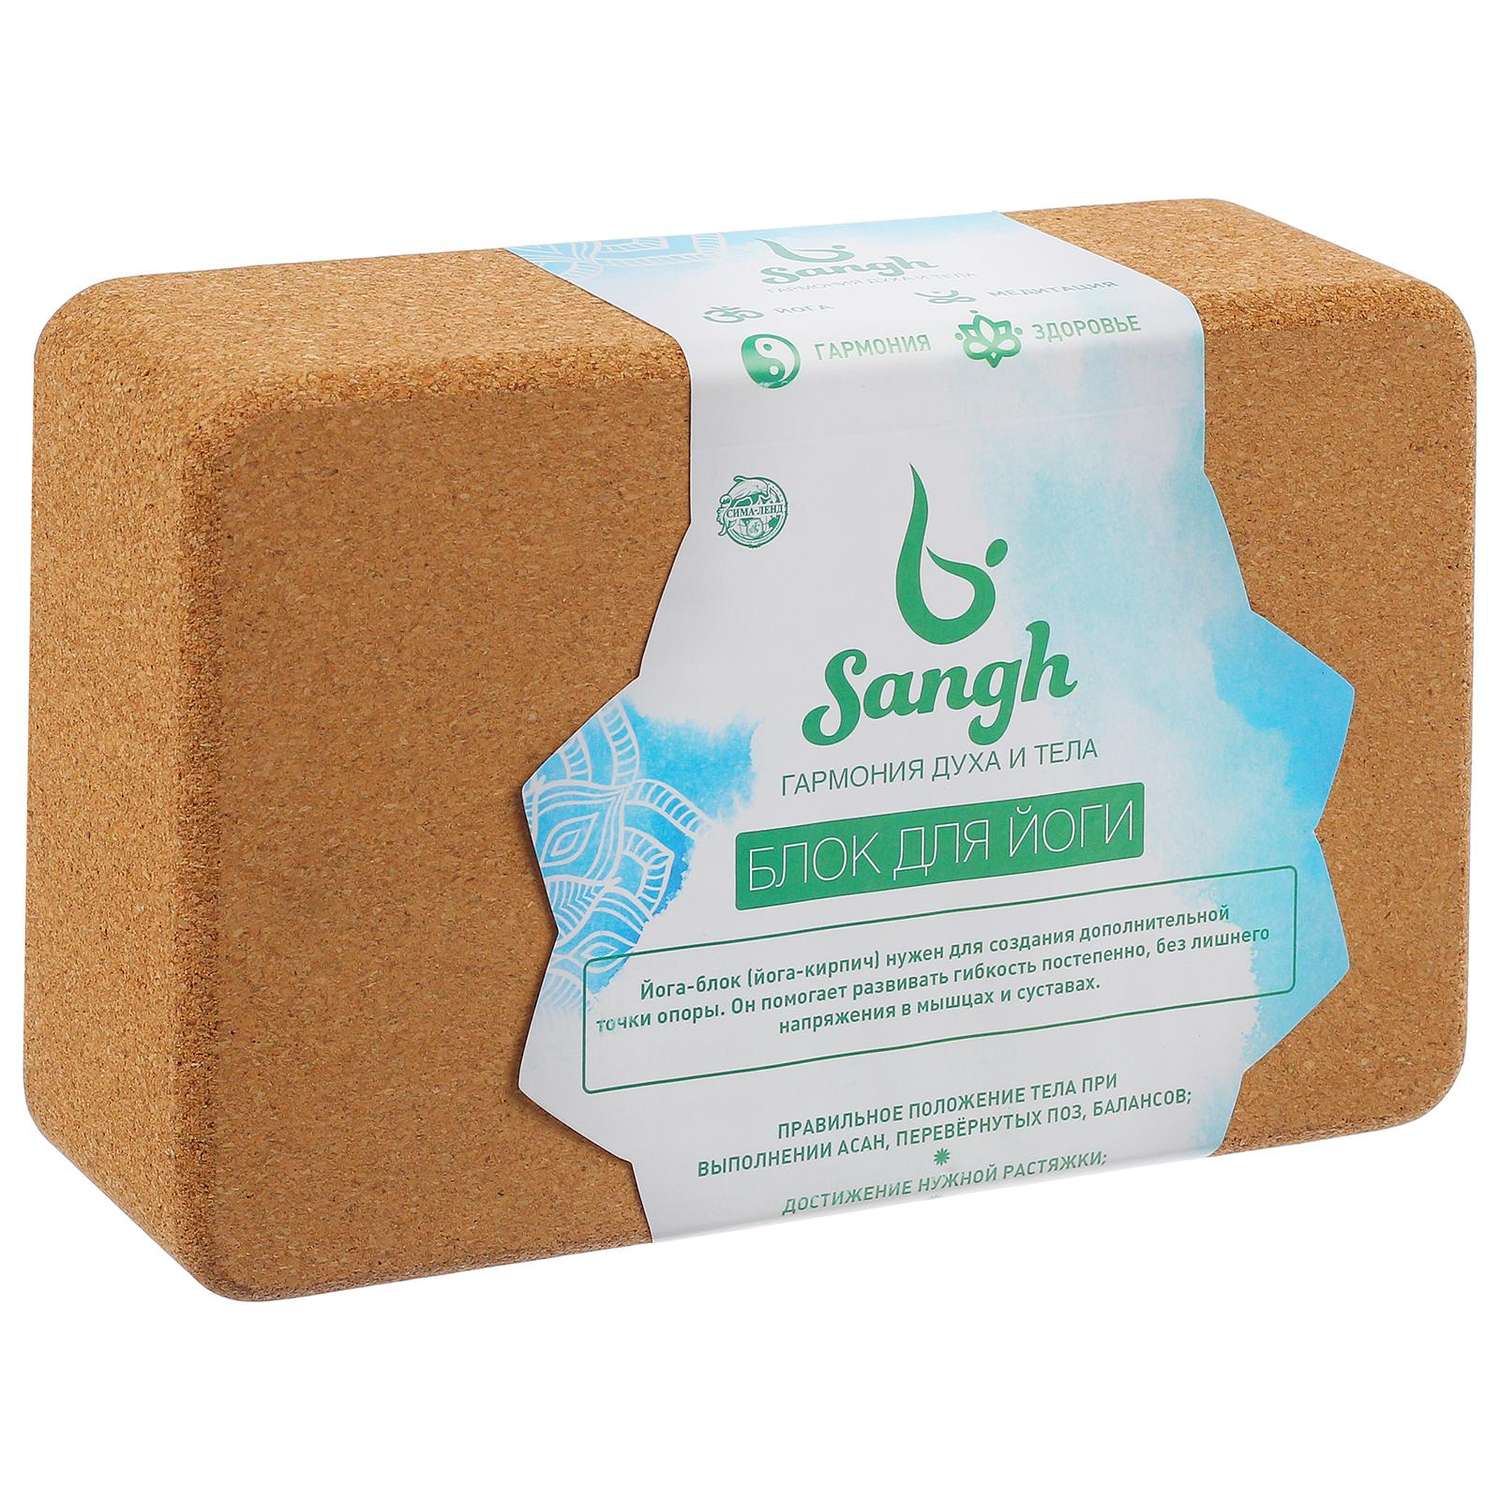 Блок для йоги Sangh пробка - фото 1